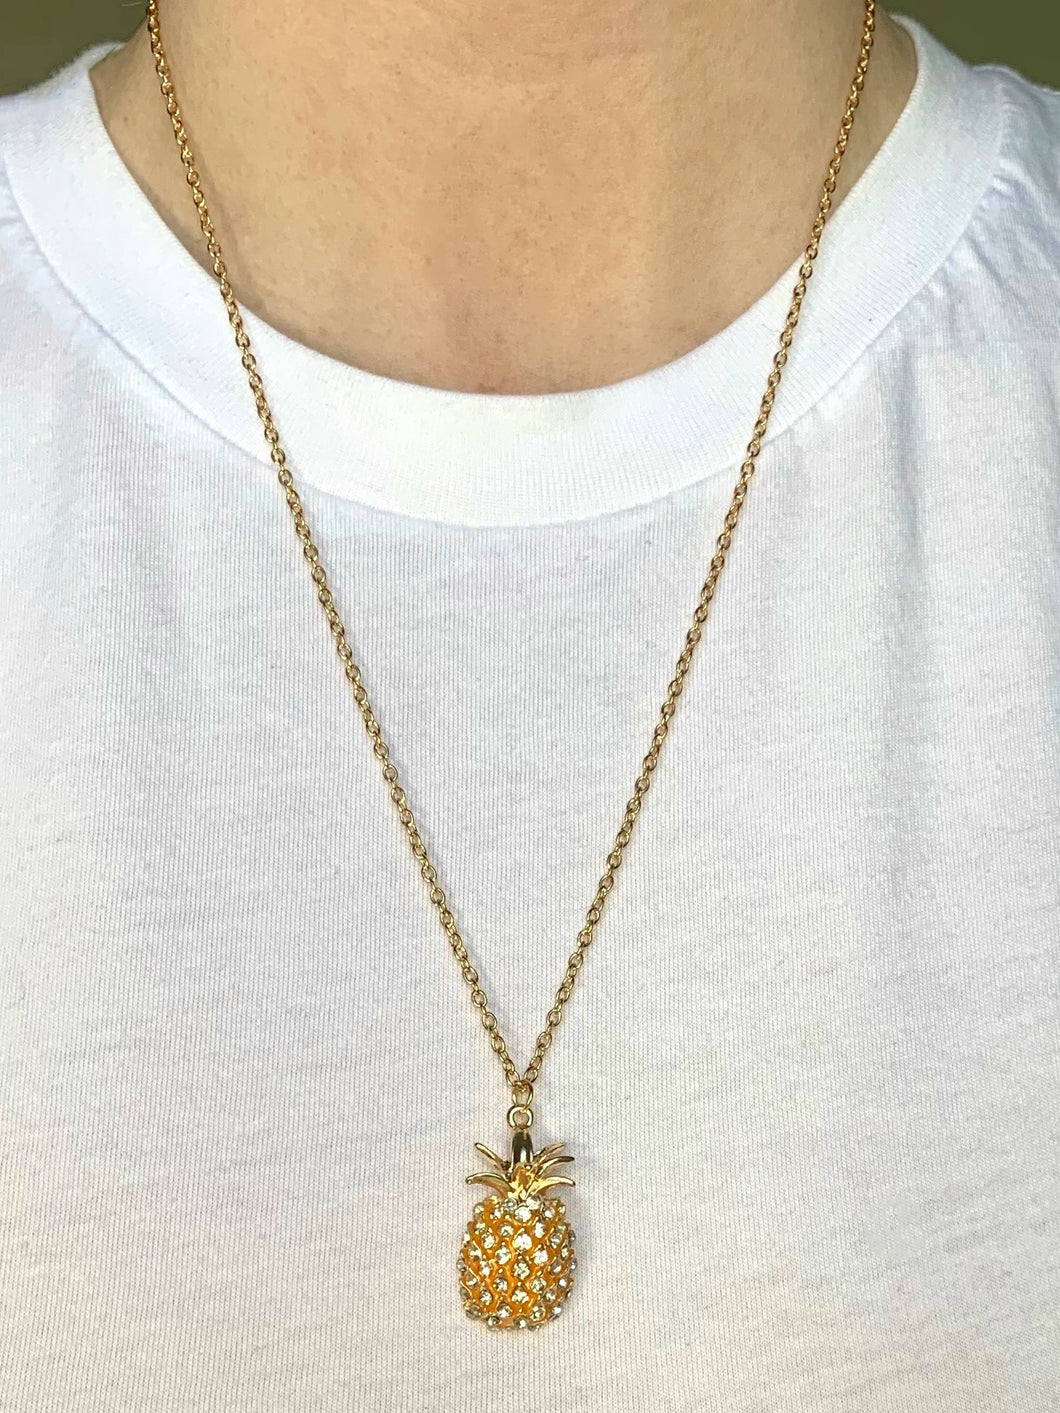 Rhinestone Pineapple Necklace